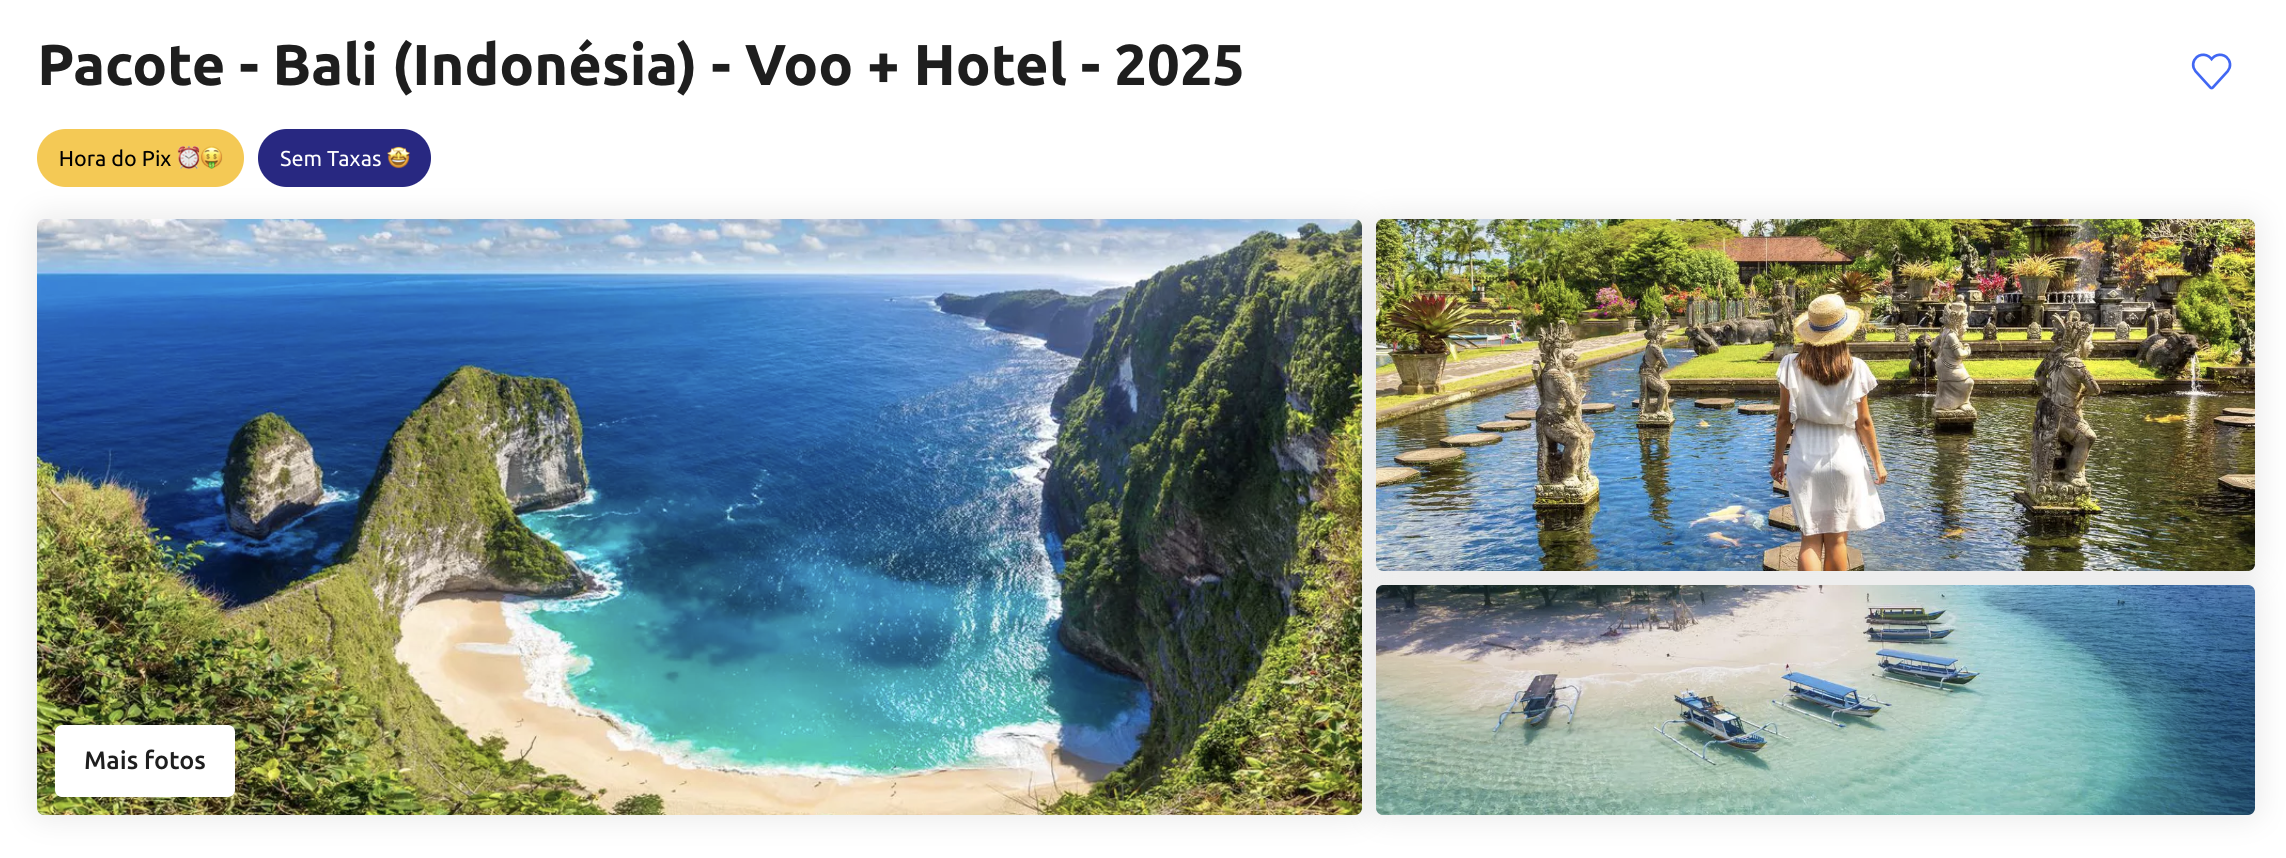 Pacote - Bali (Indonésia) - Voo + Hotel - 2025
